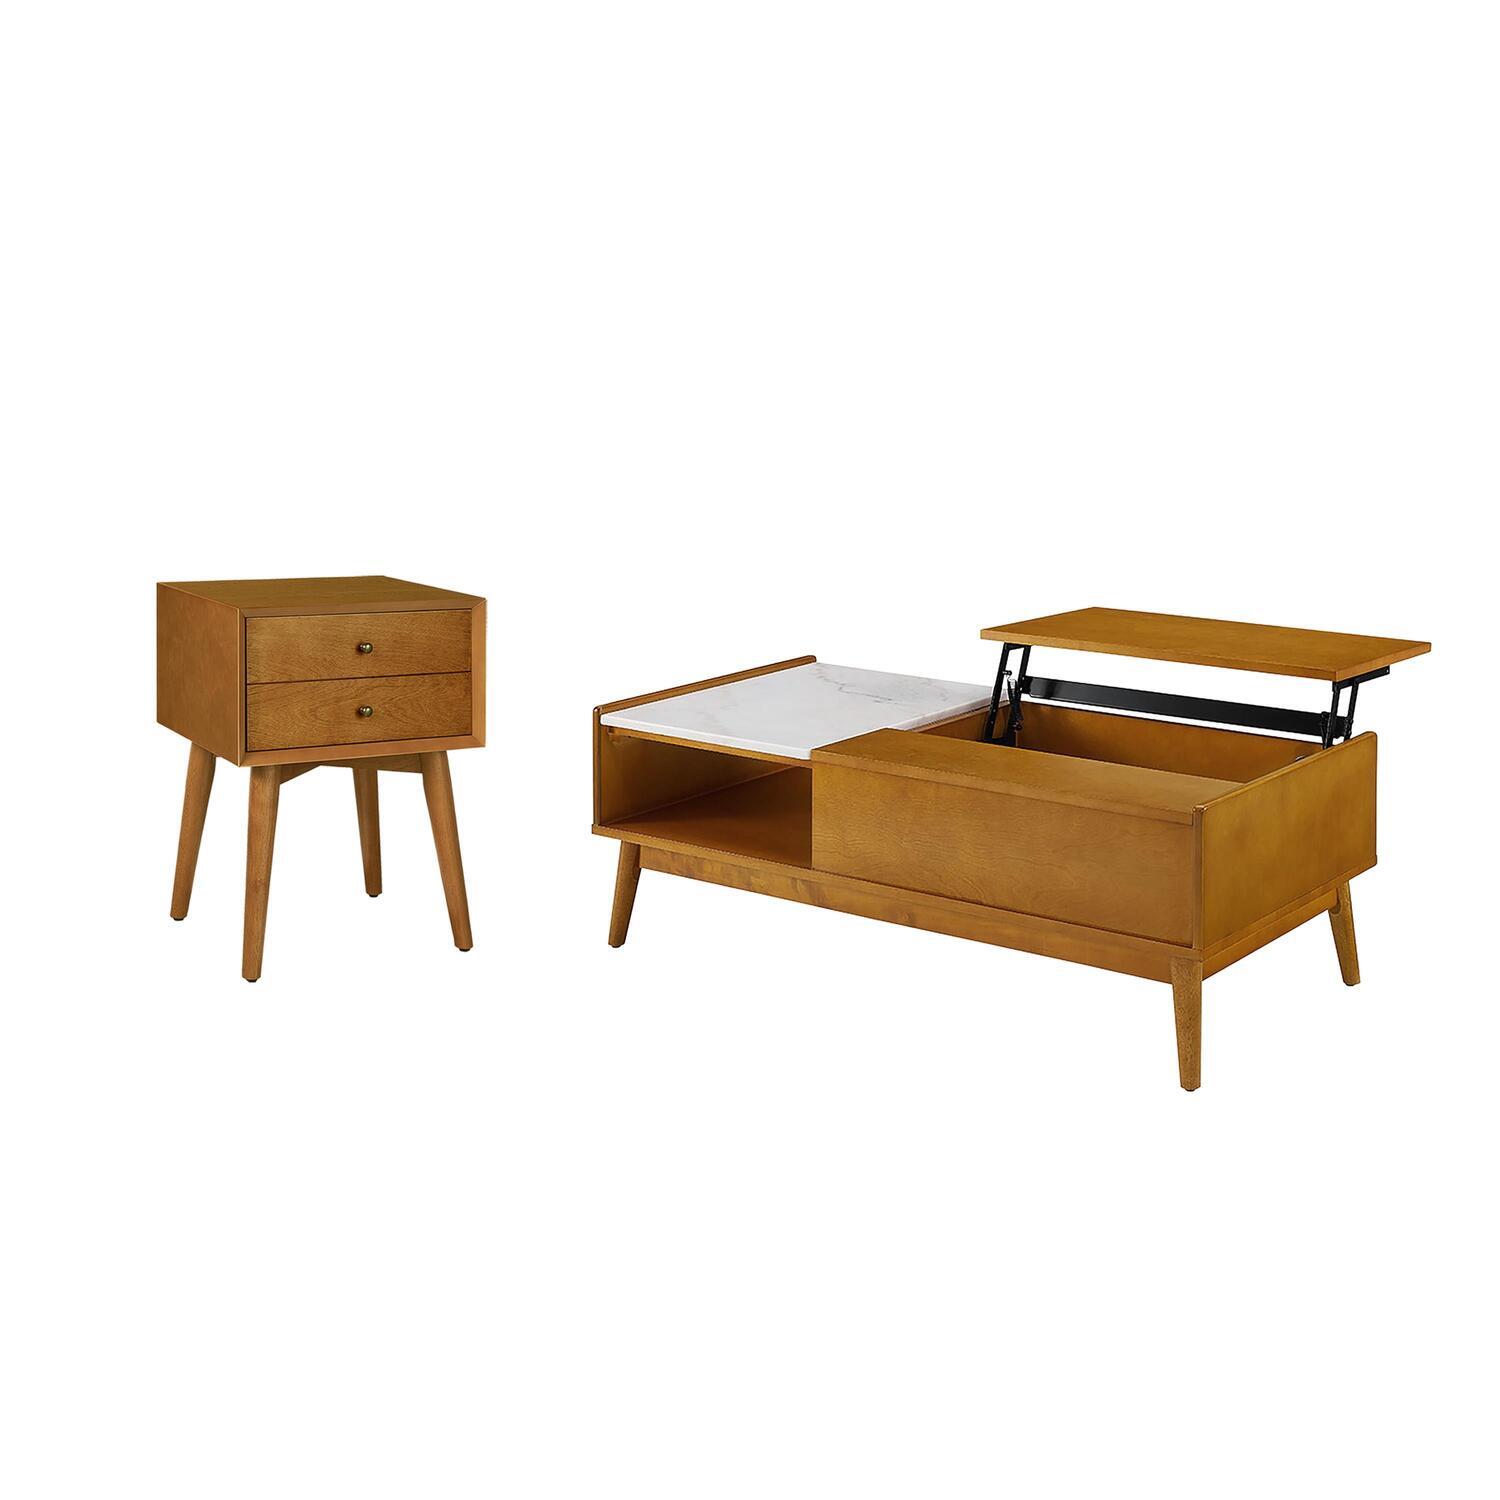 Crosley Furniture Landon 2 Piece Set - Coffee, End Table - image 1 of 7